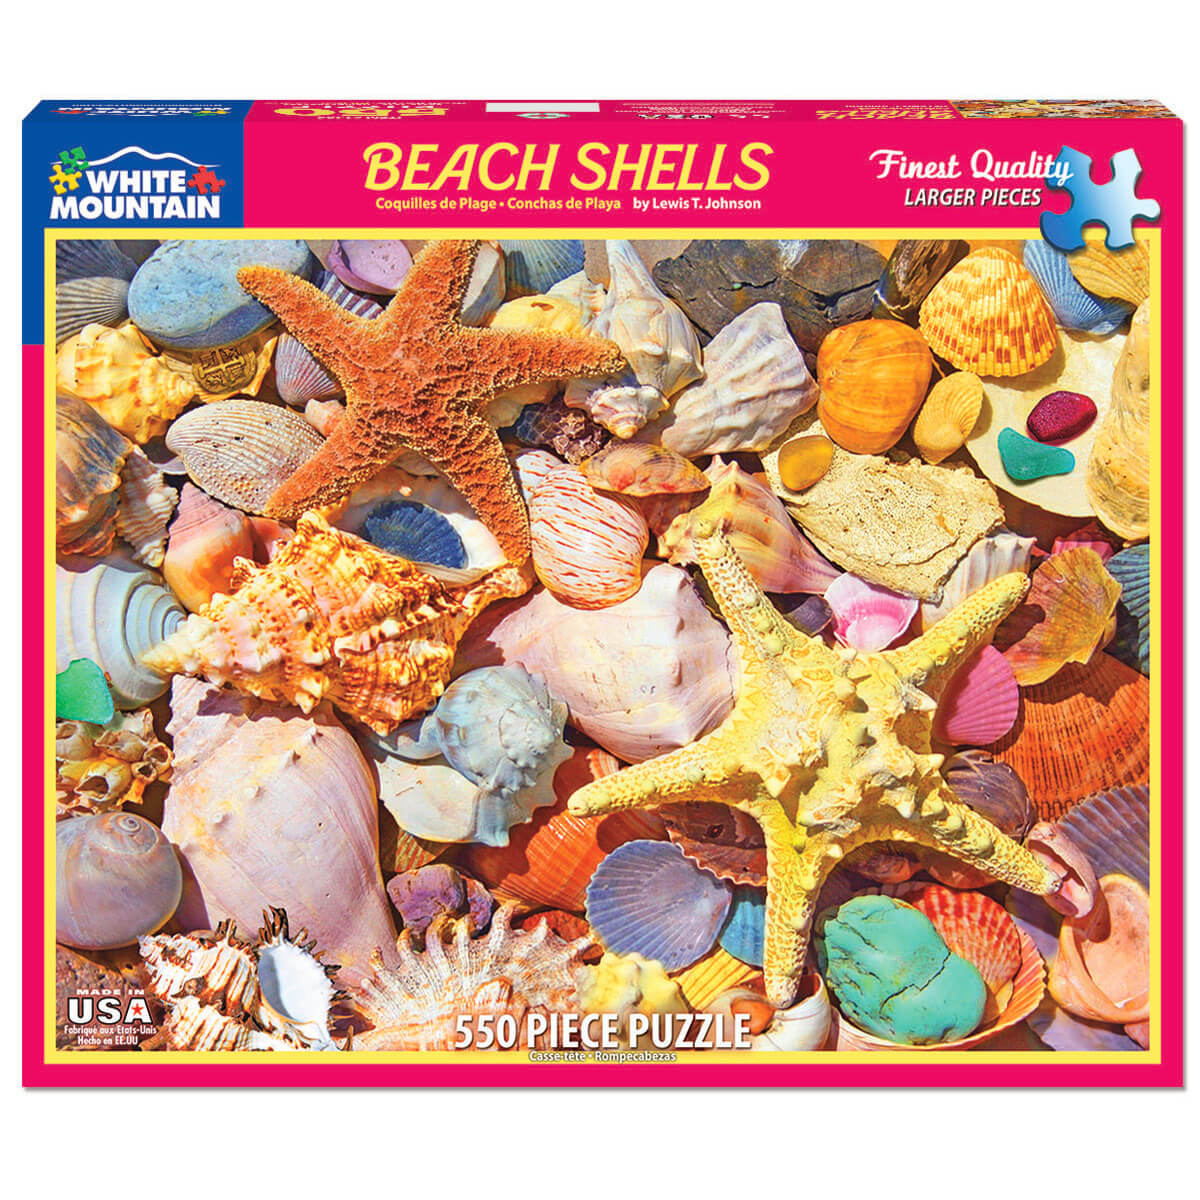 White Mountain Puzzles Beach Shells 550 Piece Jigsaw Puzzle